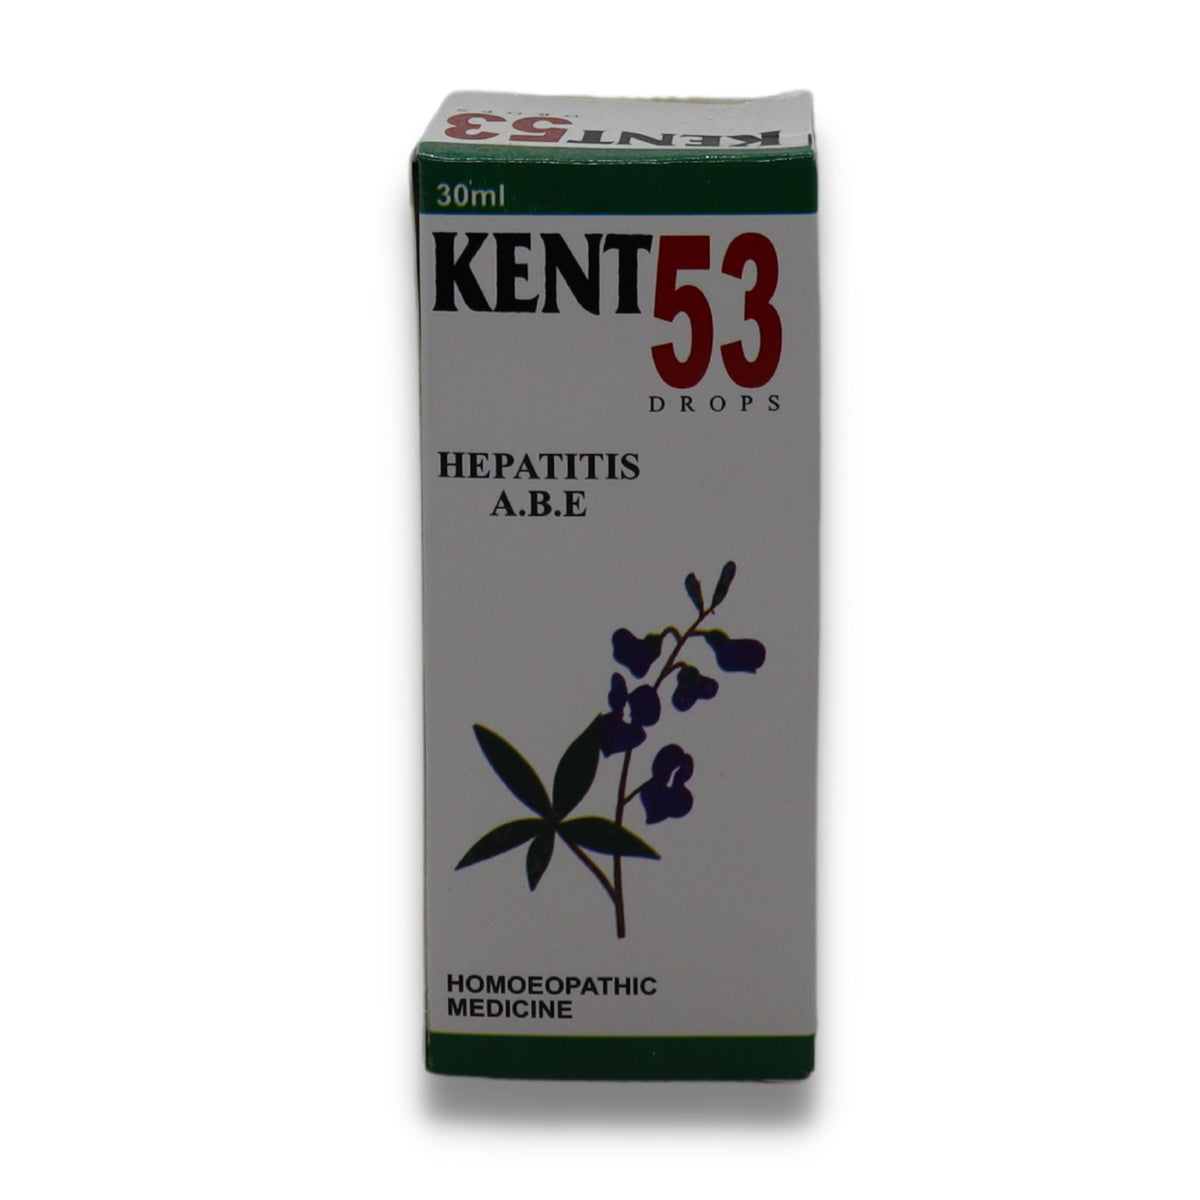 Kent 53 drop (hepatitis A, B, and E)